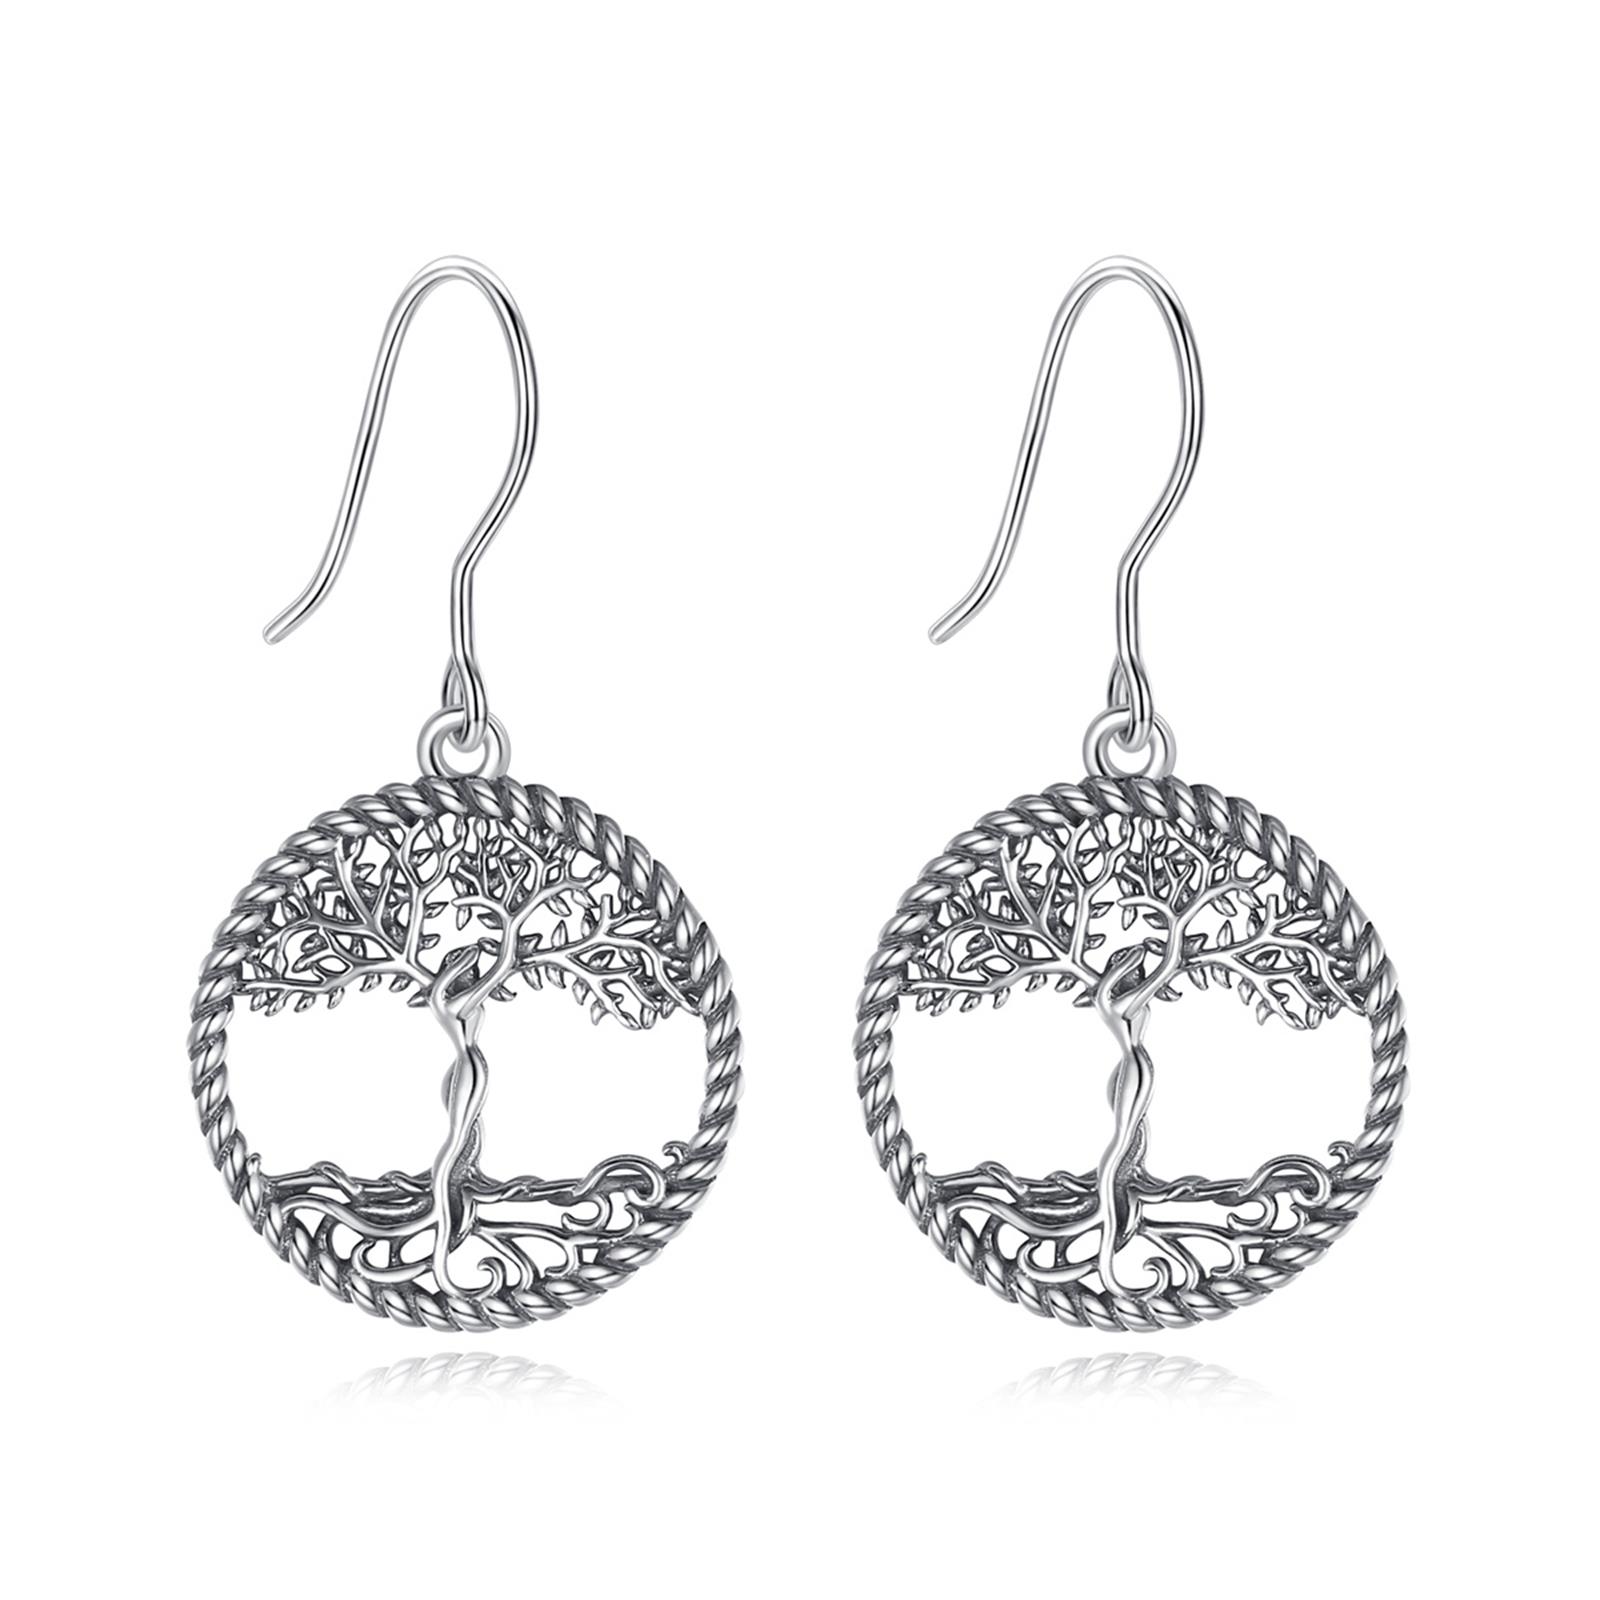 Merryshine Jewelry Fashion New 925 Sterling Silver Polishing Oxidation Tree of life Earhook Earrings